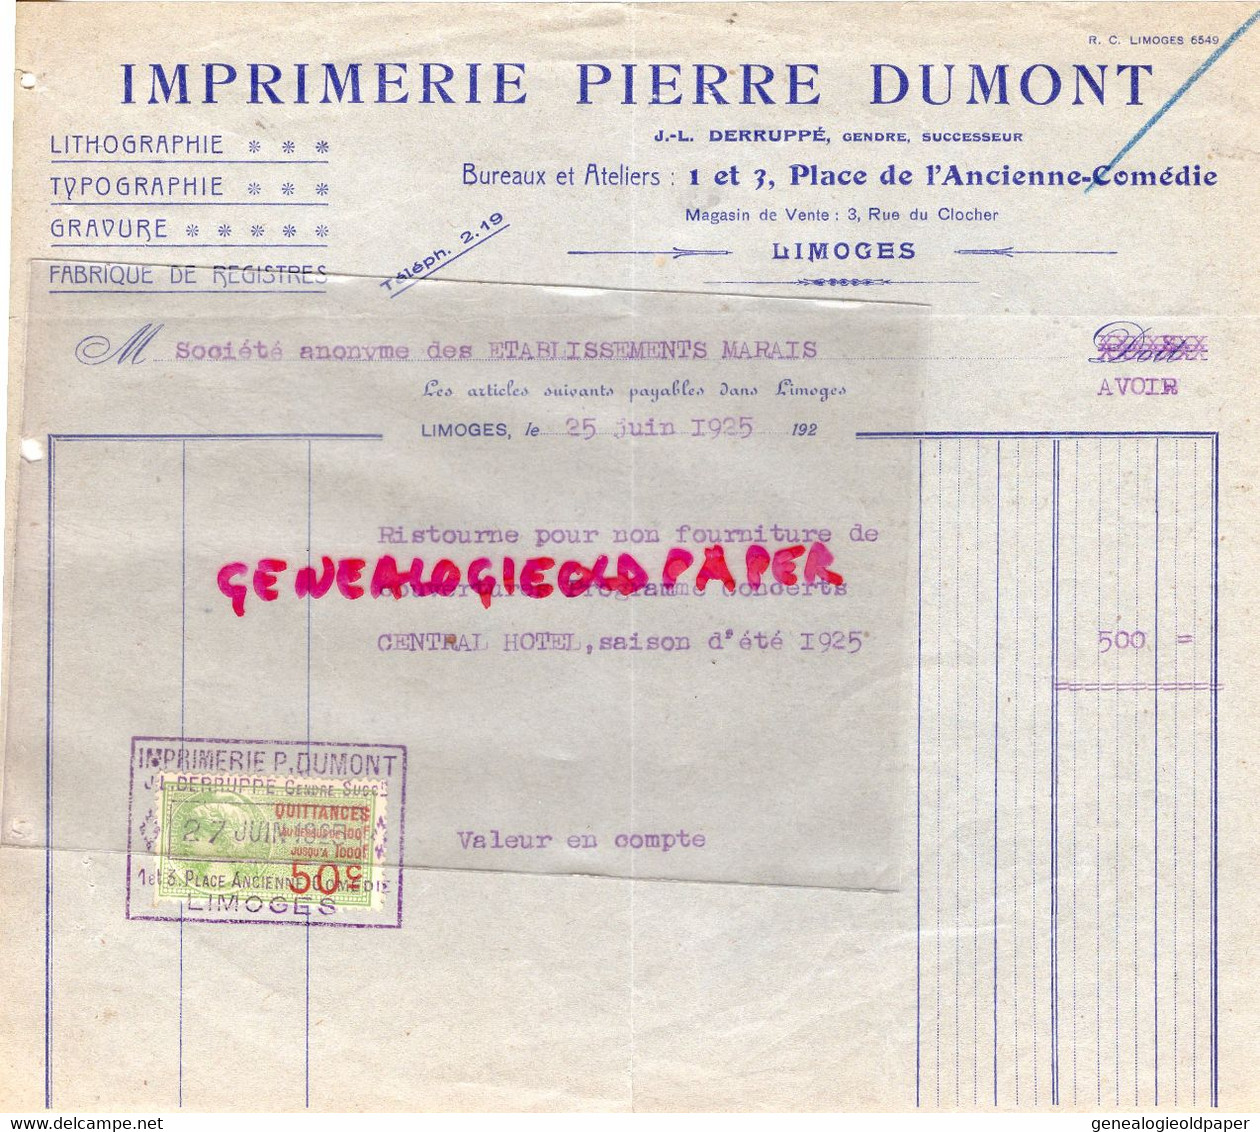 87- LIMOGES- RARE FACTURE IMPRIMERIE PIERRE DUMONT- J.L. DERRUPPE -1 PLACE ANCIENNE COMEDIE- LITHOGRAPHIE GRAVURE -1925 - Printing & Stationeries